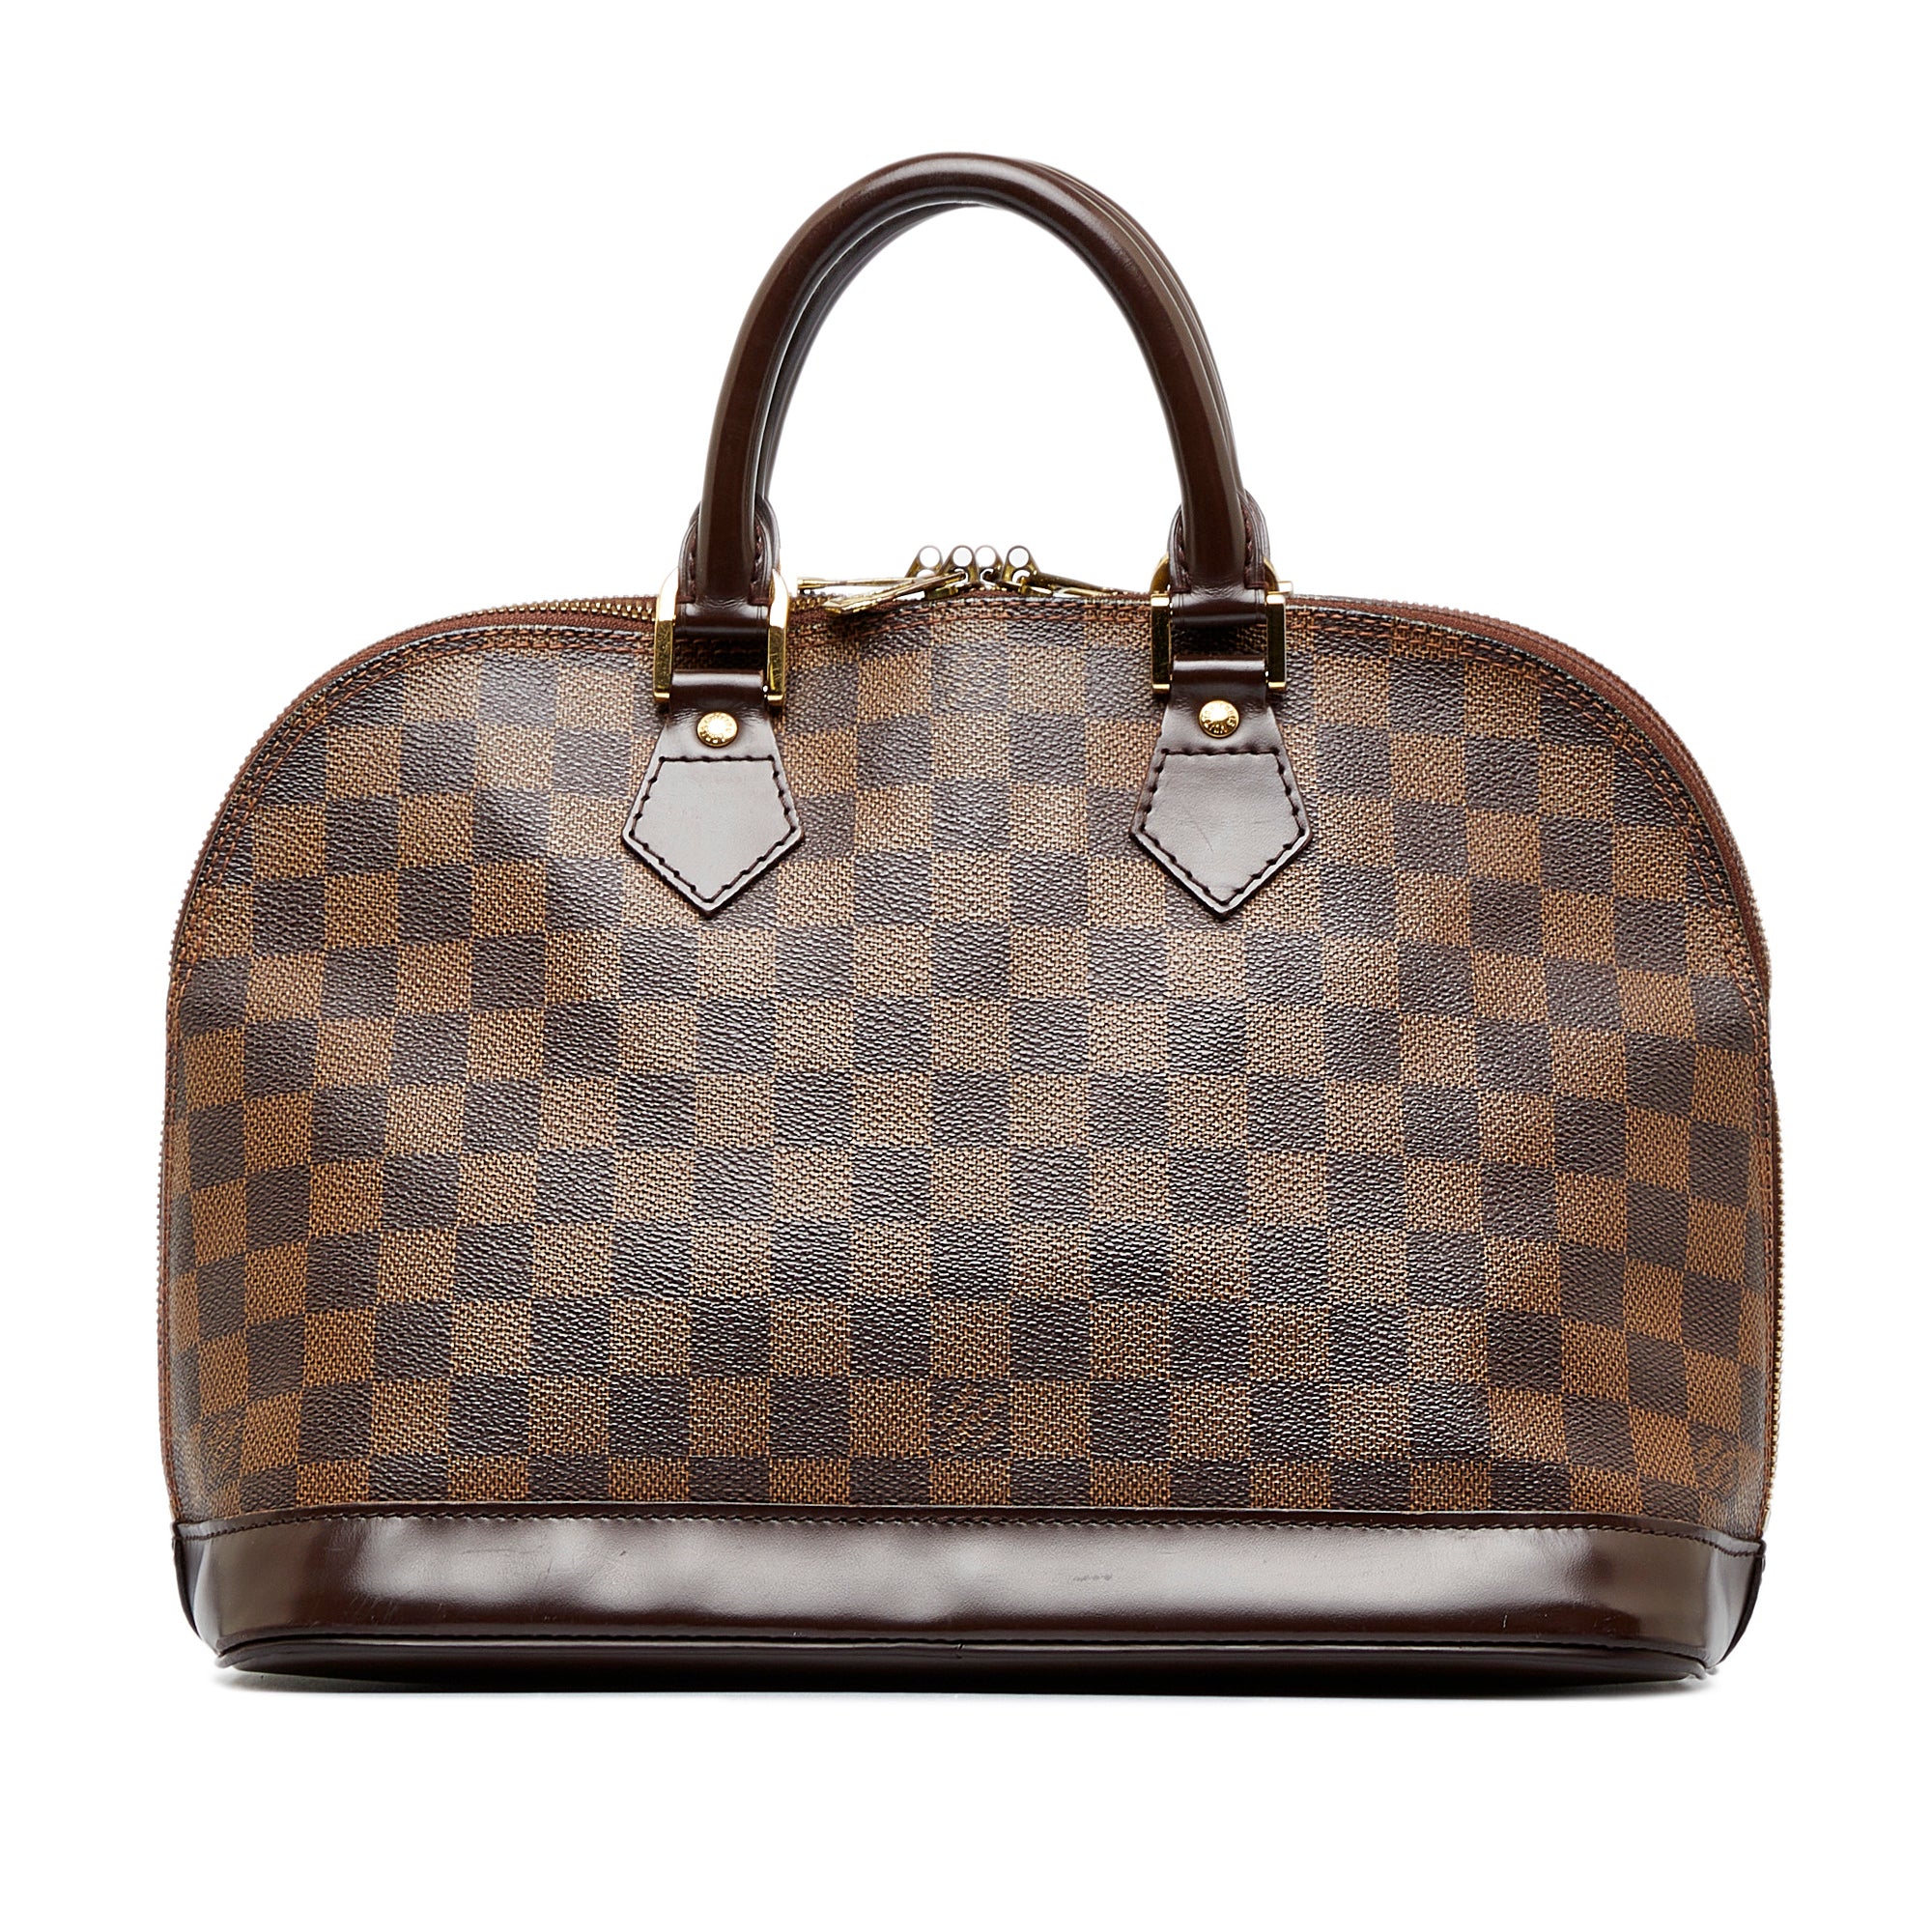 Brown Printed Louis Vuitton Ladies Bag